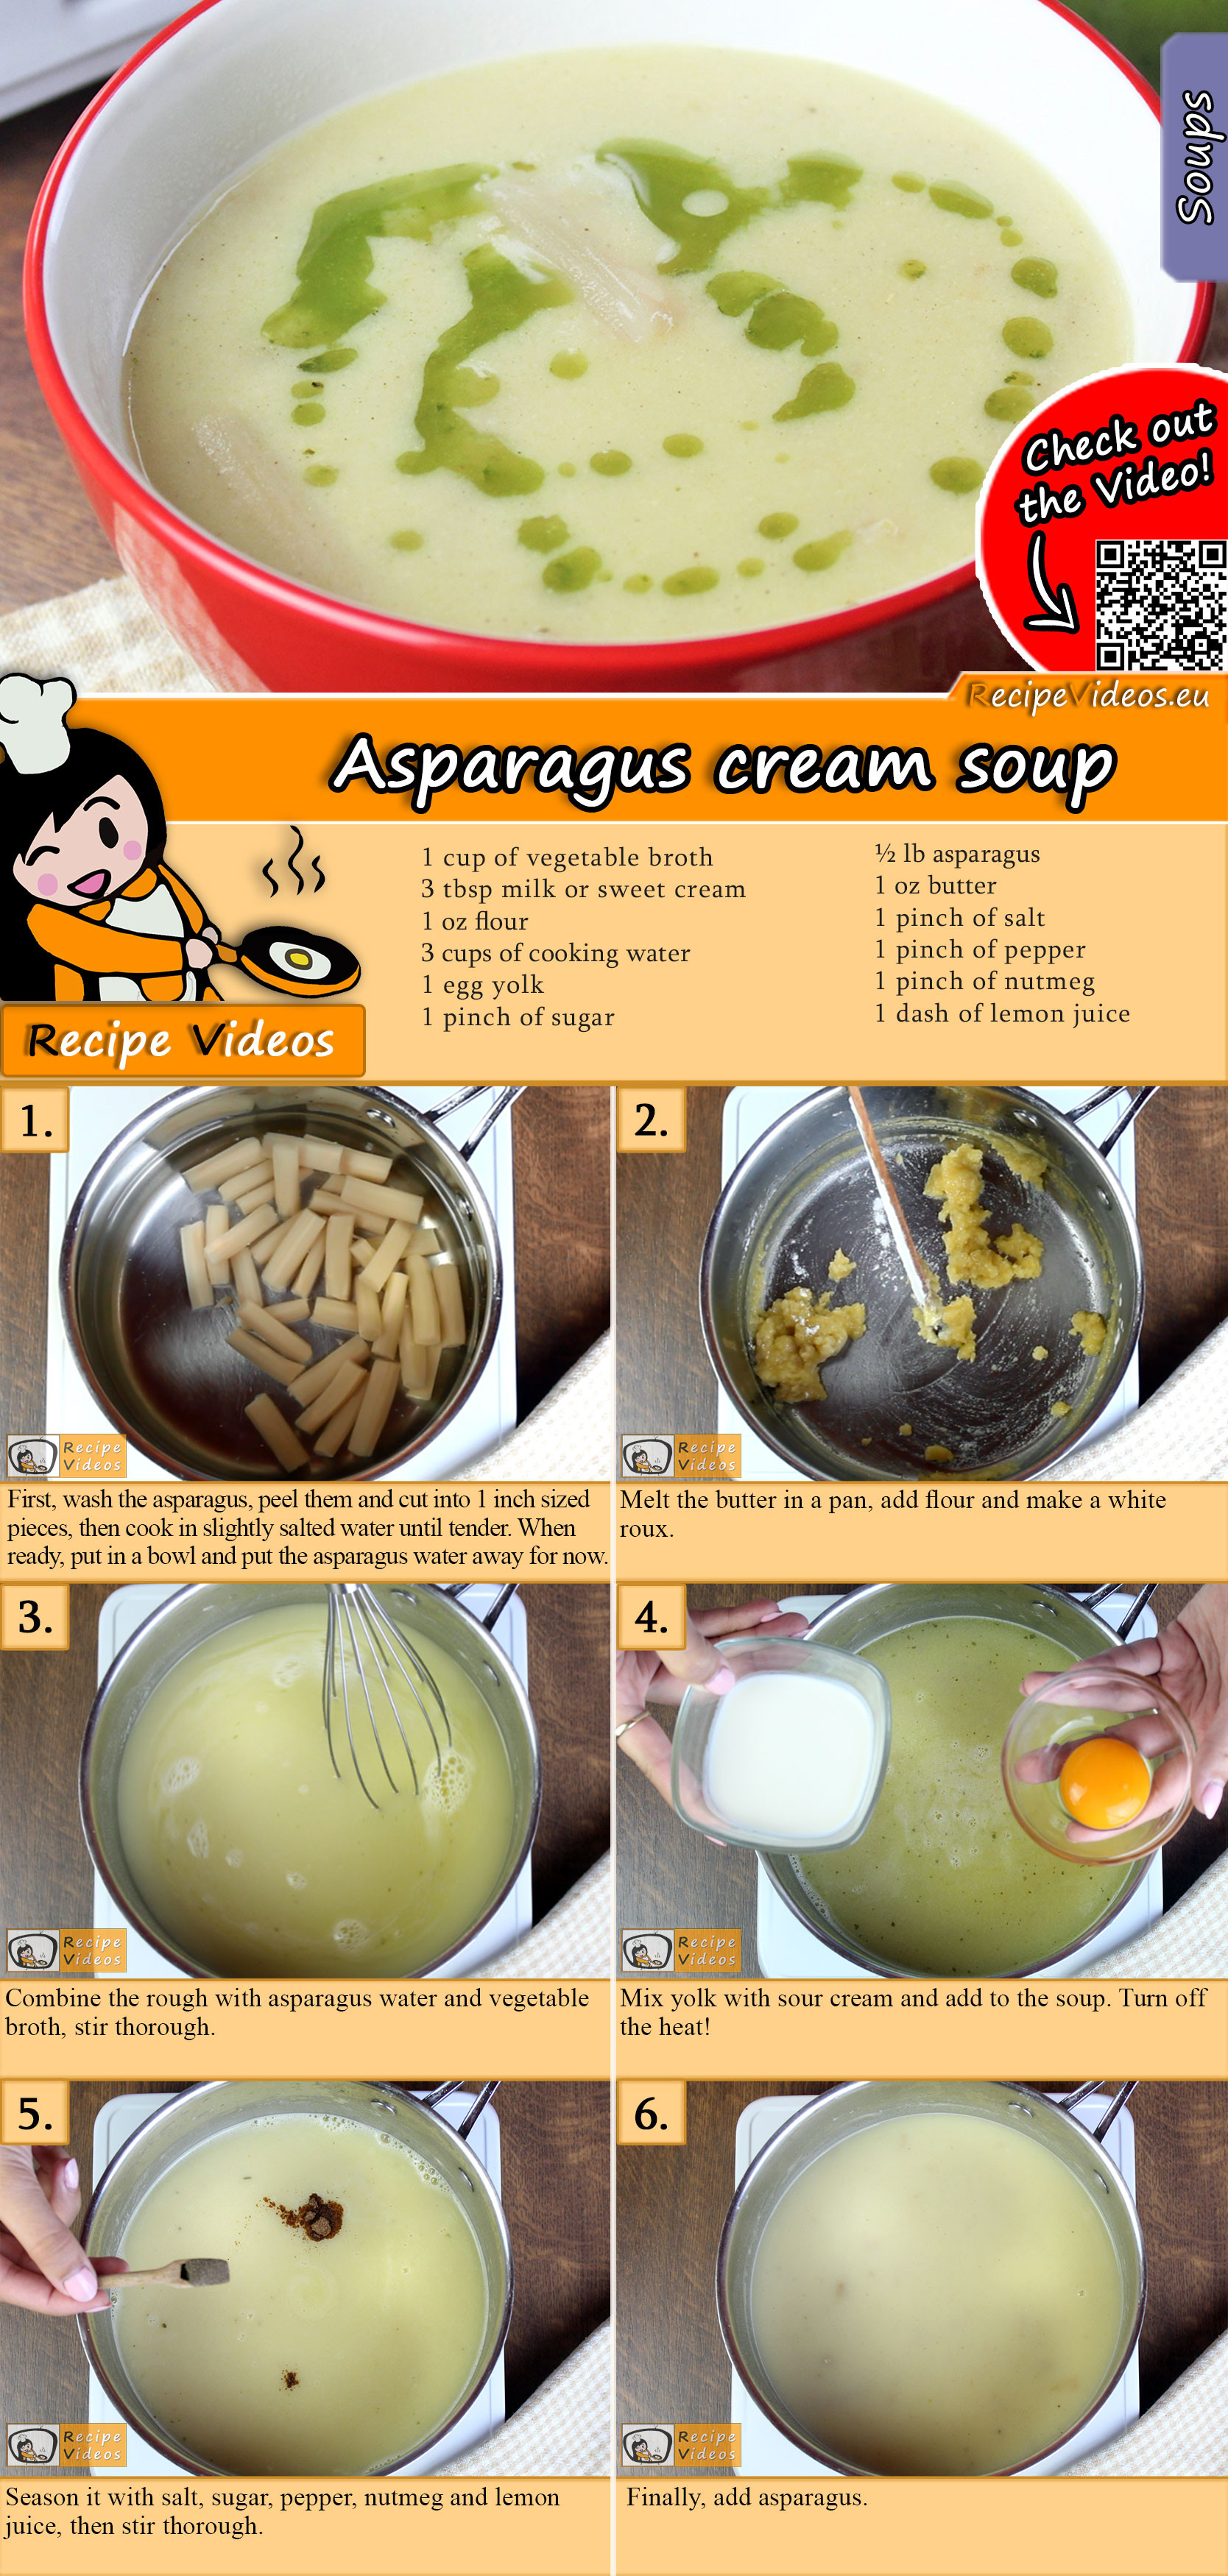 Asparagus cream soup recipe with video